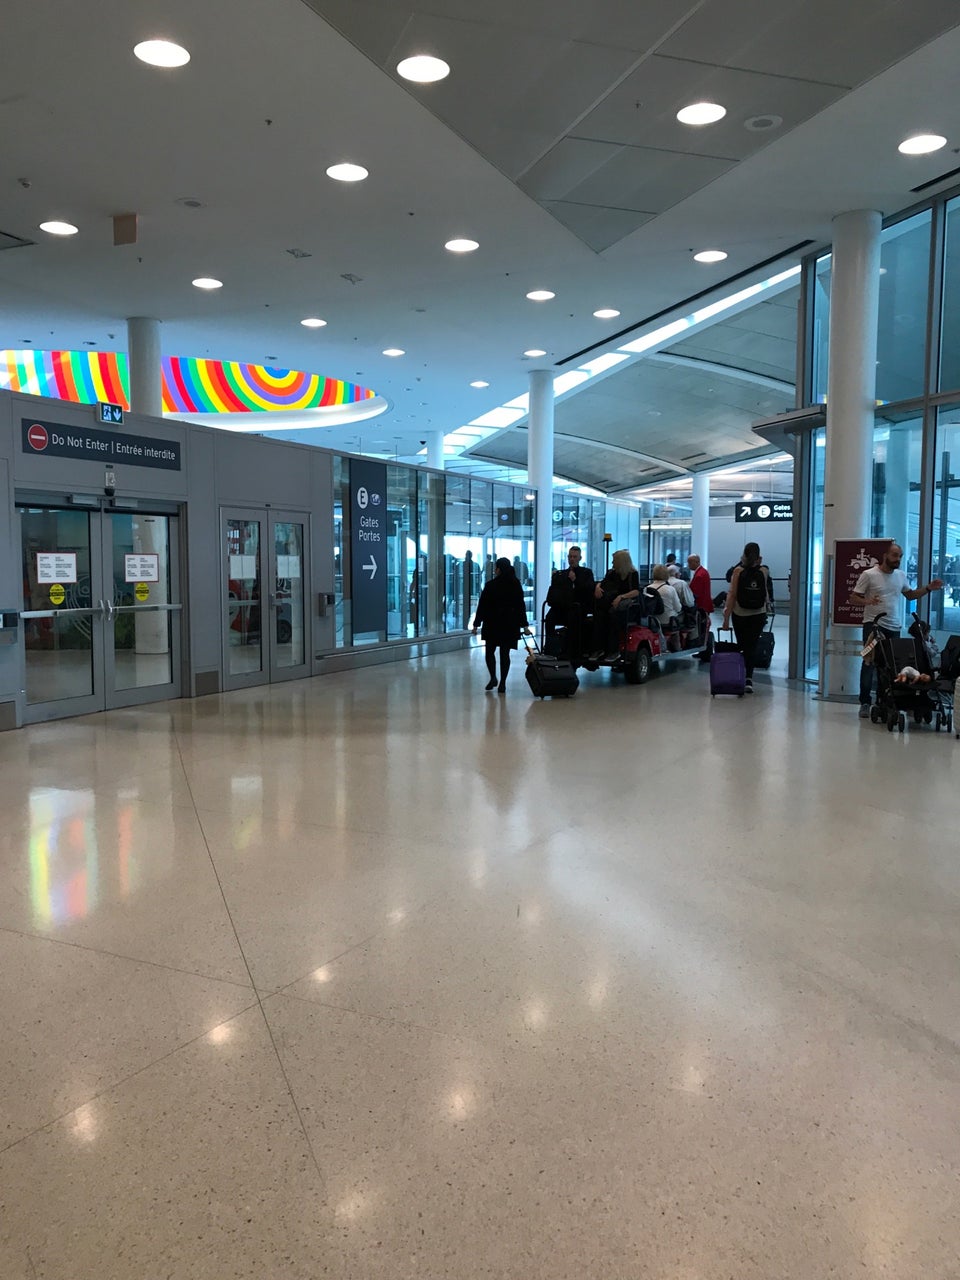 Photo of Toronto Pearson International Airport (YYZ)